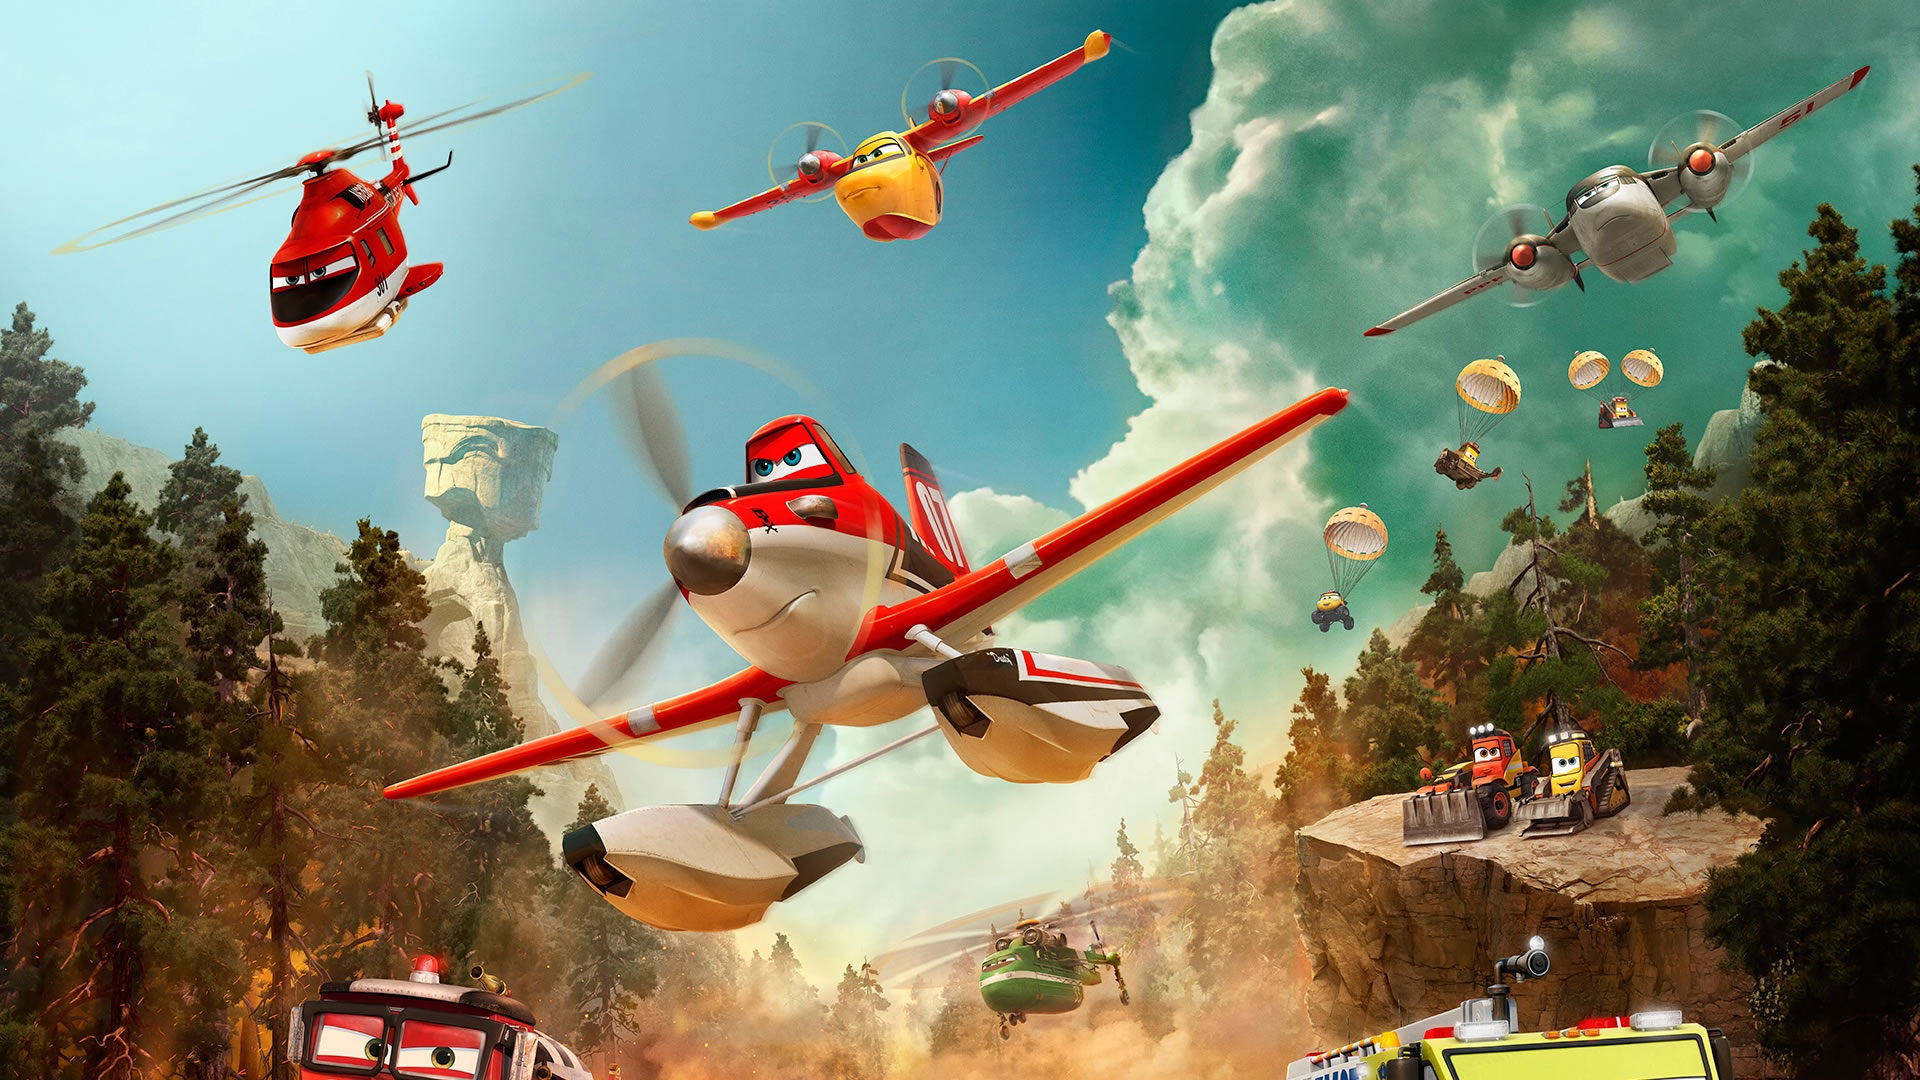 download wallpaper: Disney – Planes Fire & Rescue wallpaper